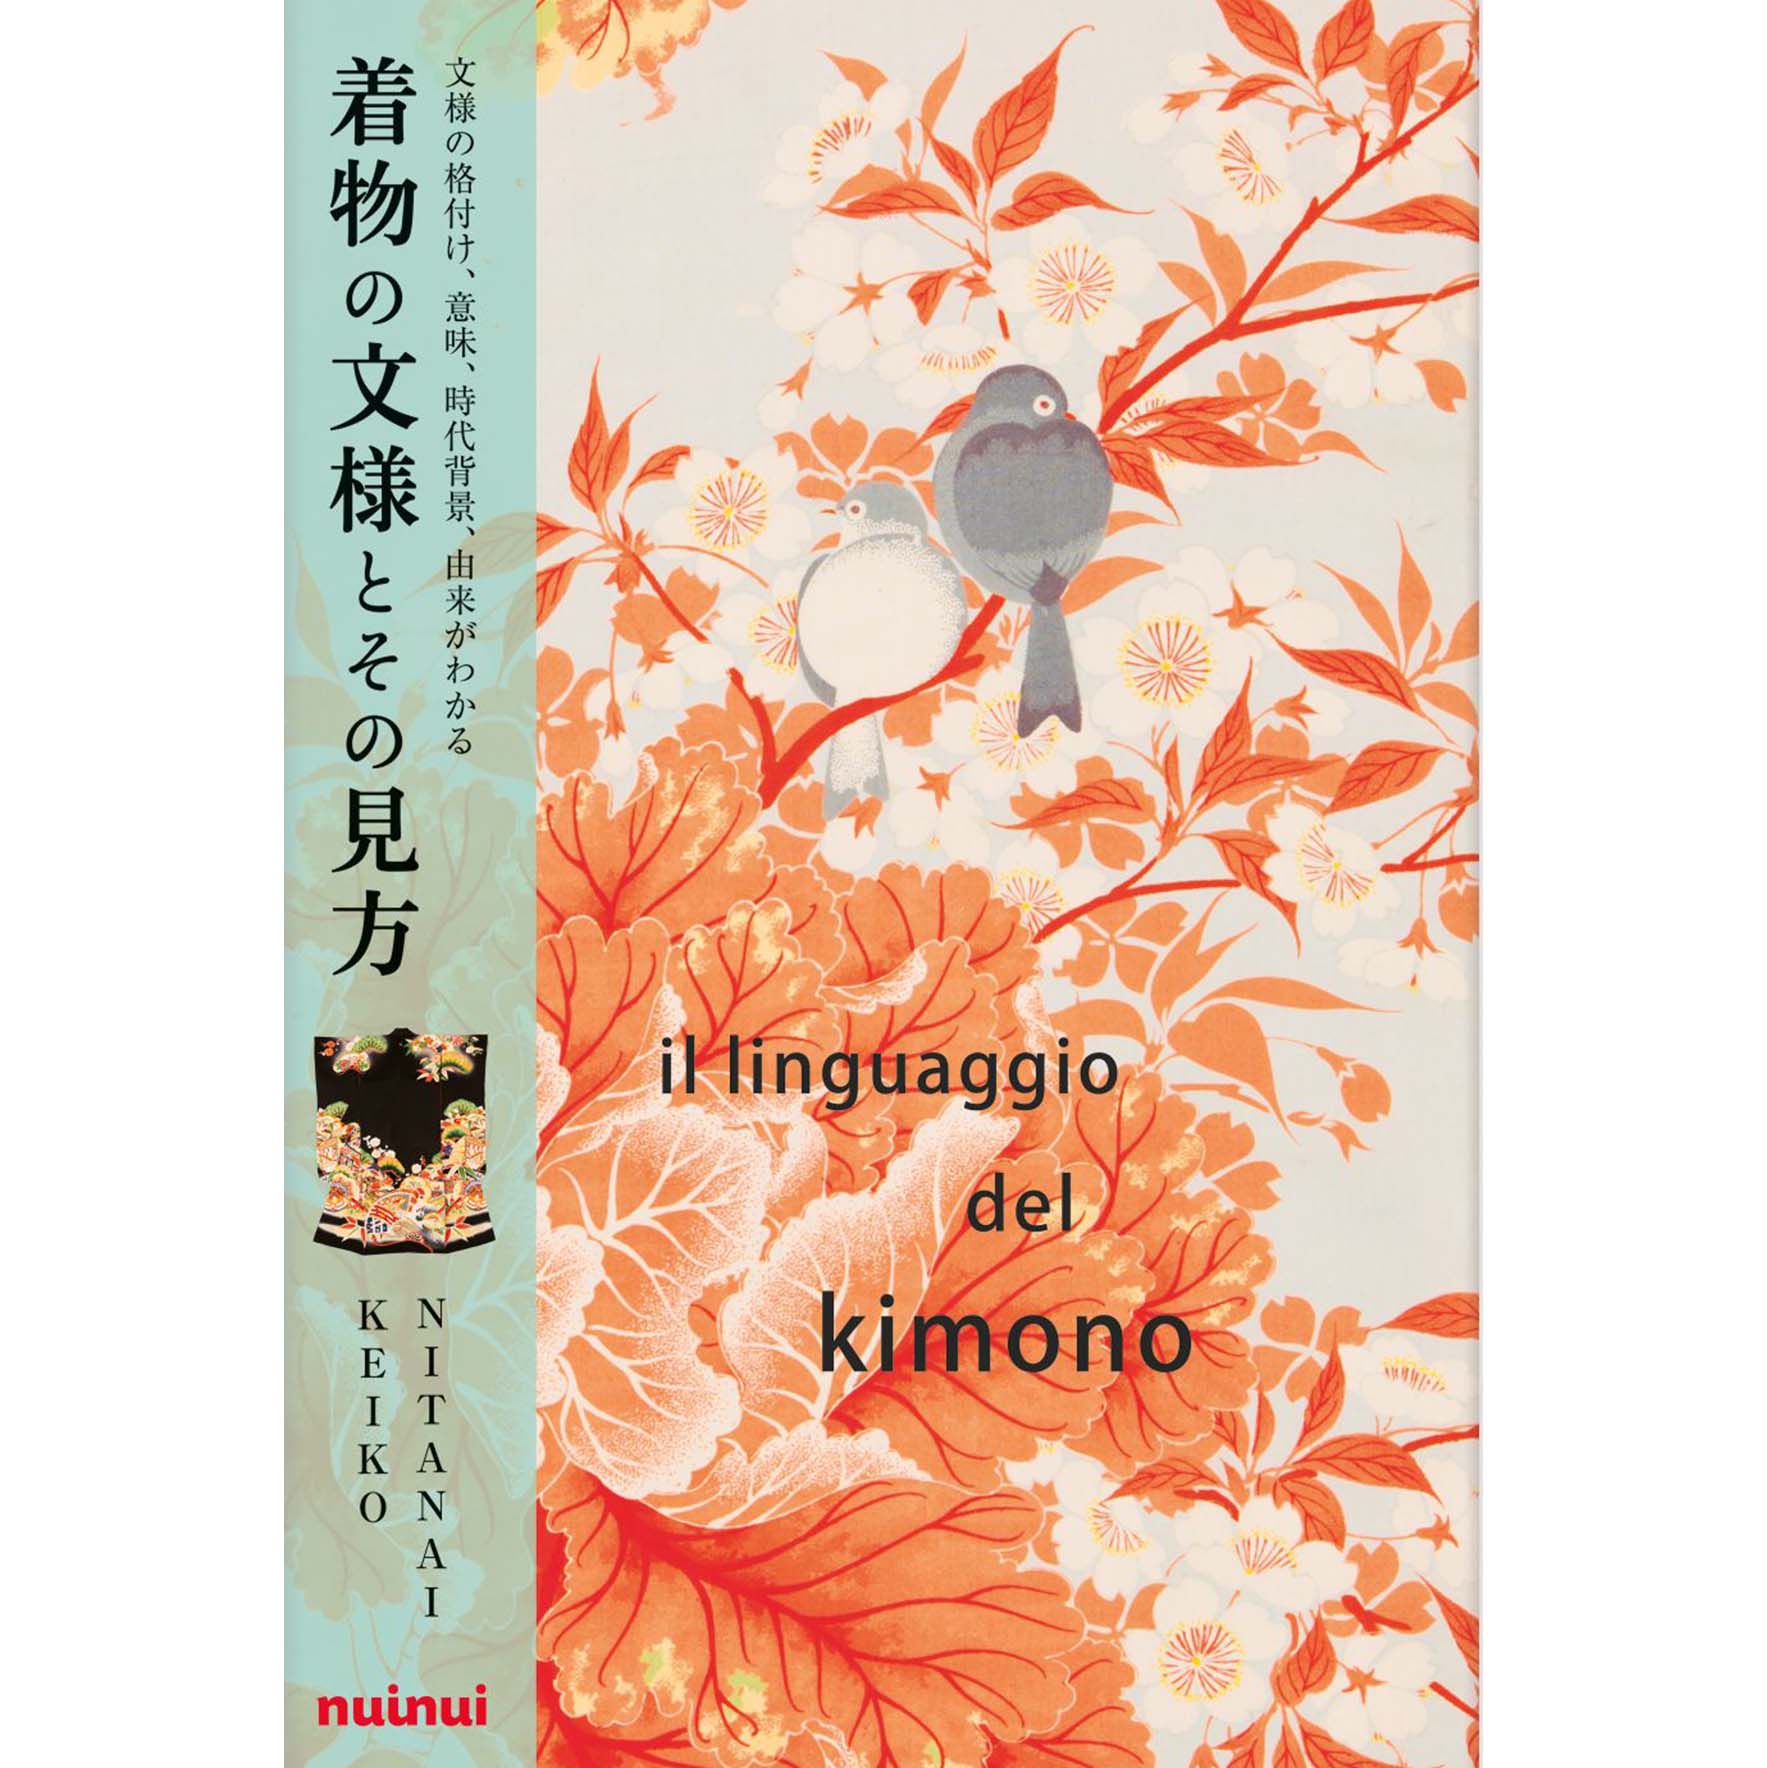 The language of the kimono